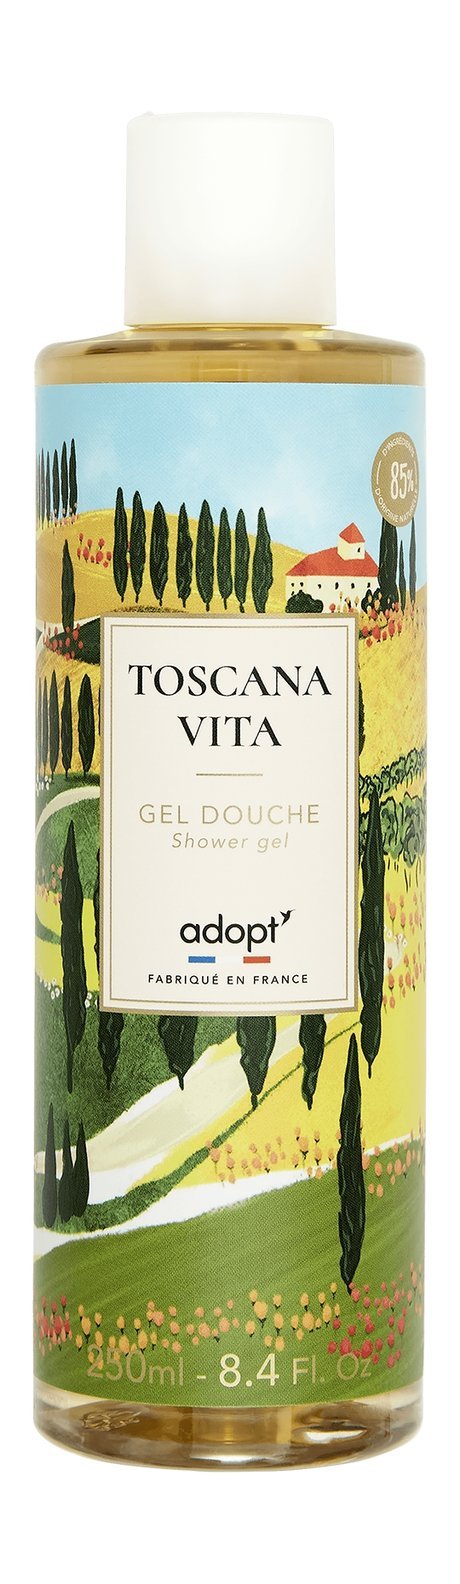 Adopt' Toscana Vita Shower Gel